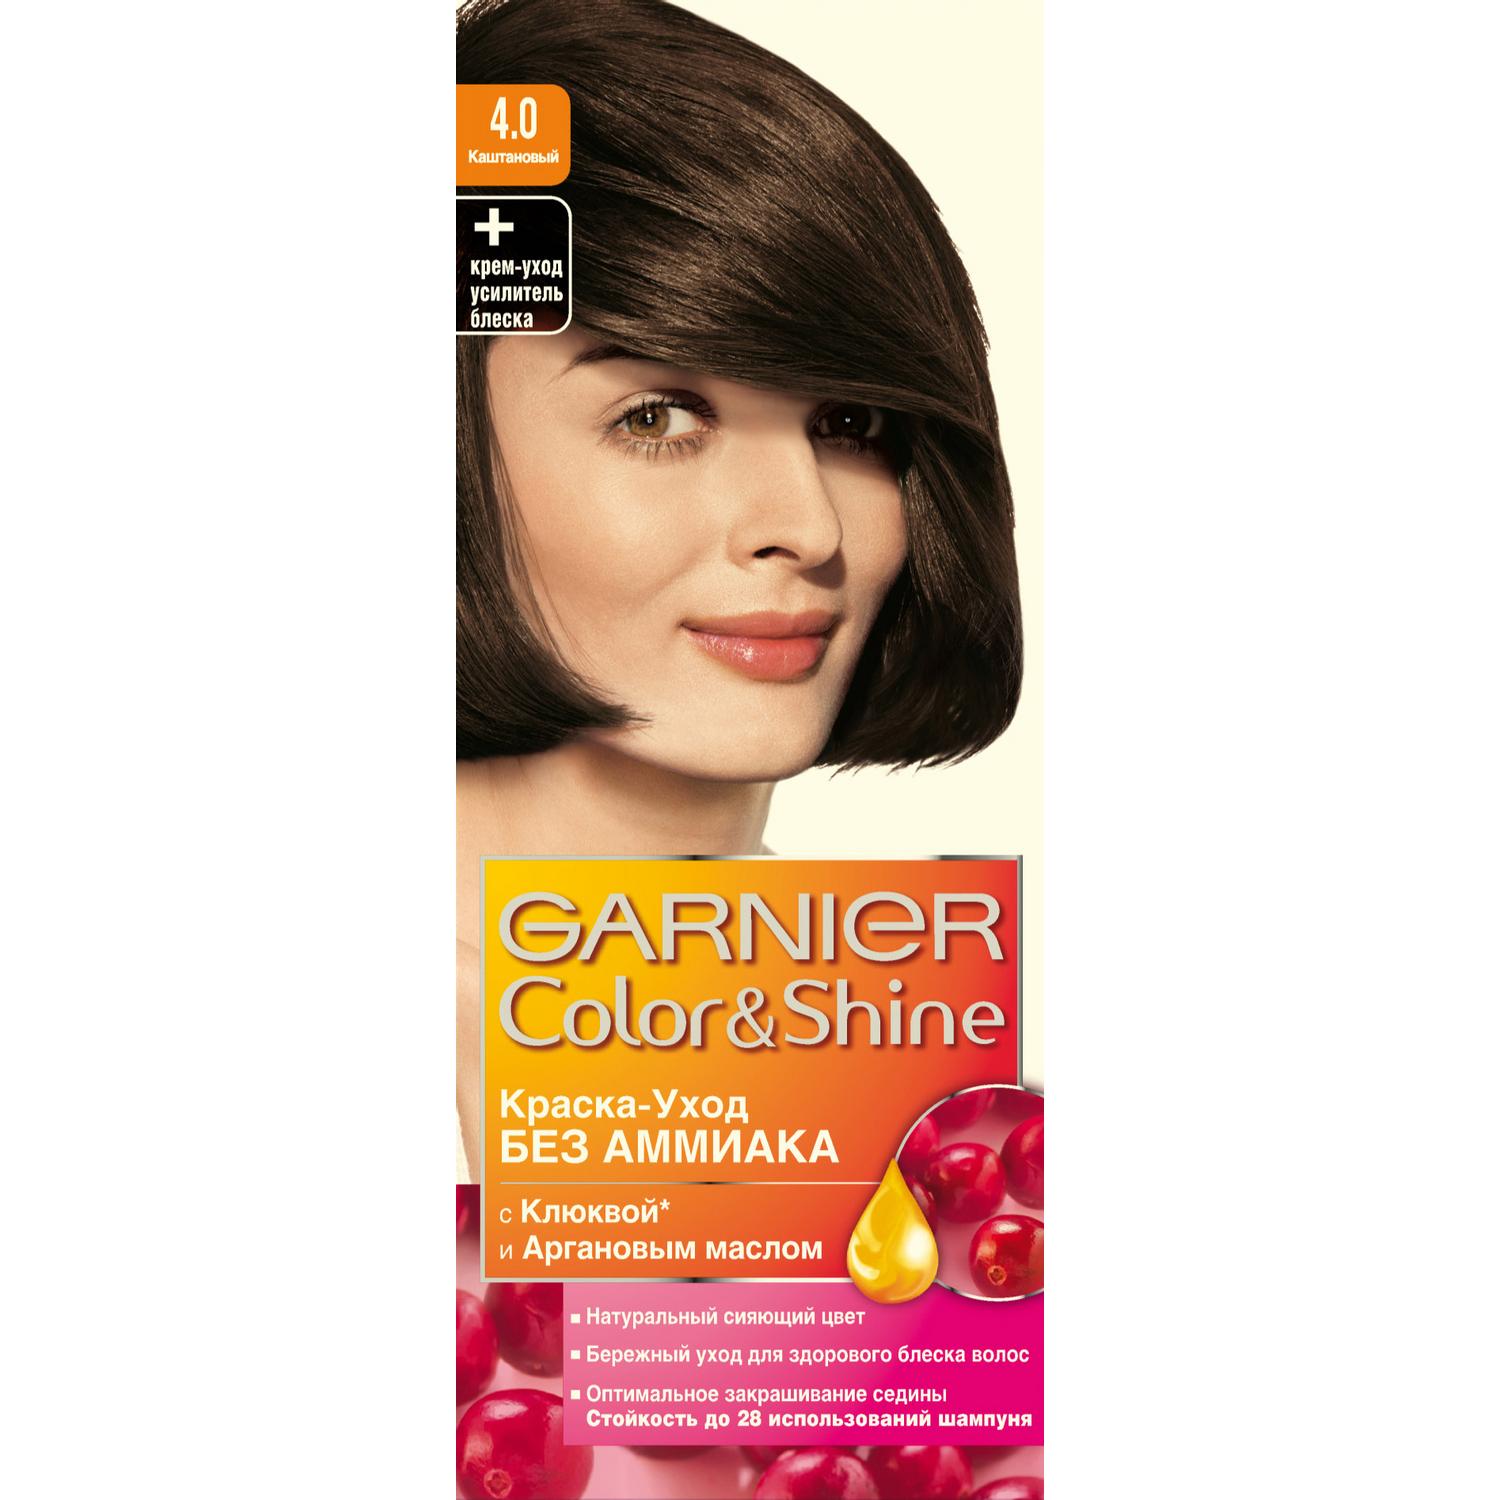 фото Краска для волос garnier color & shine без аммиака 4.0 каштановый